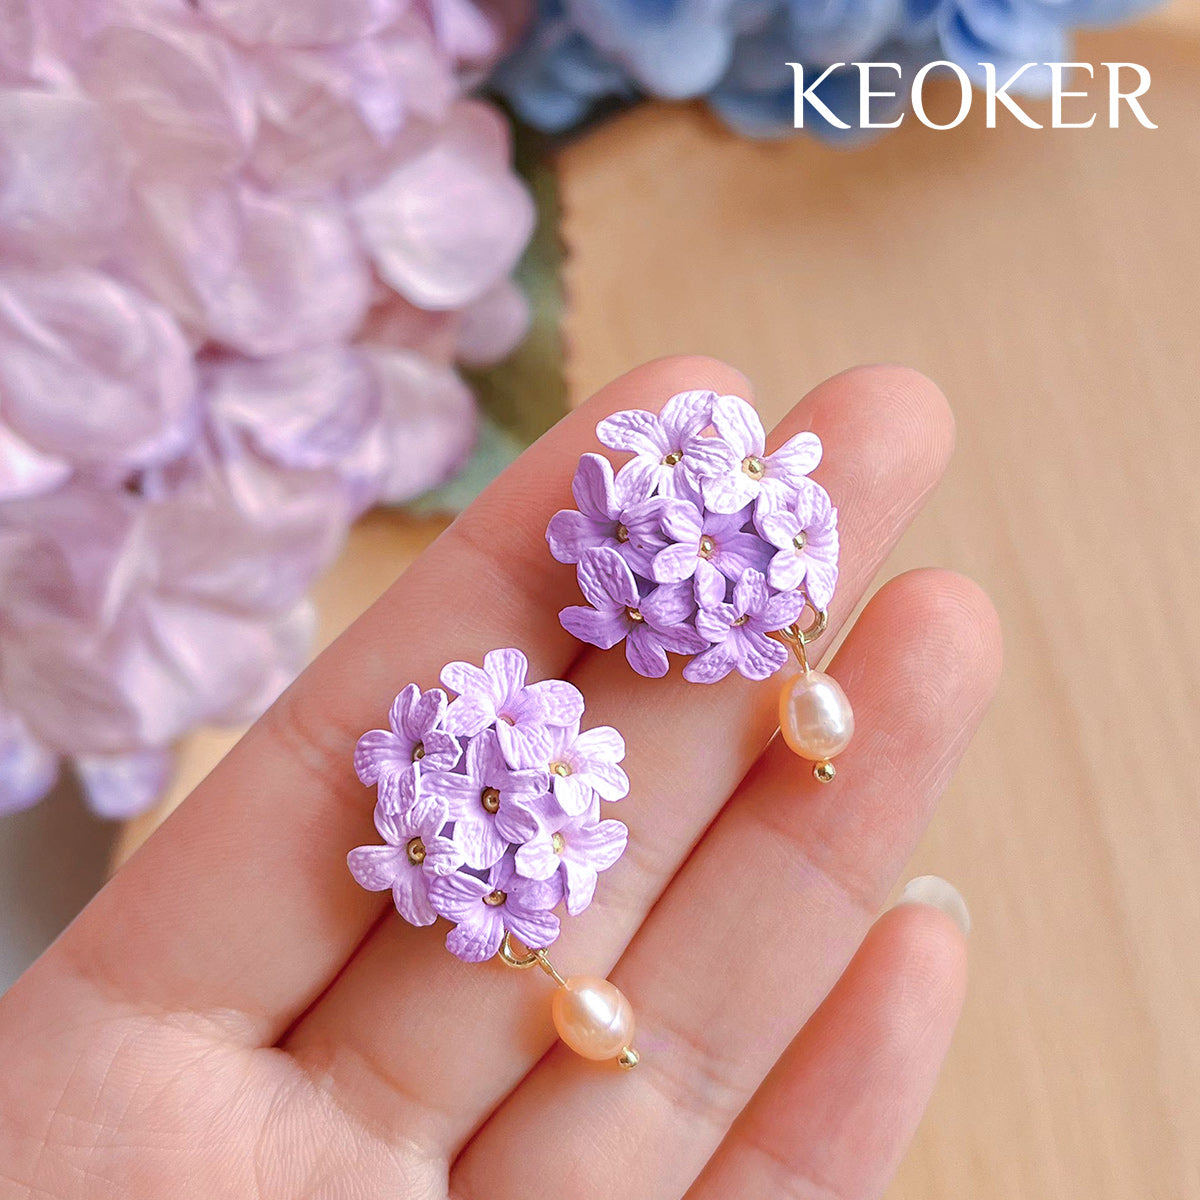 KEOKER Mini Lavender Polymer Clay Earrings Molds & Cutters